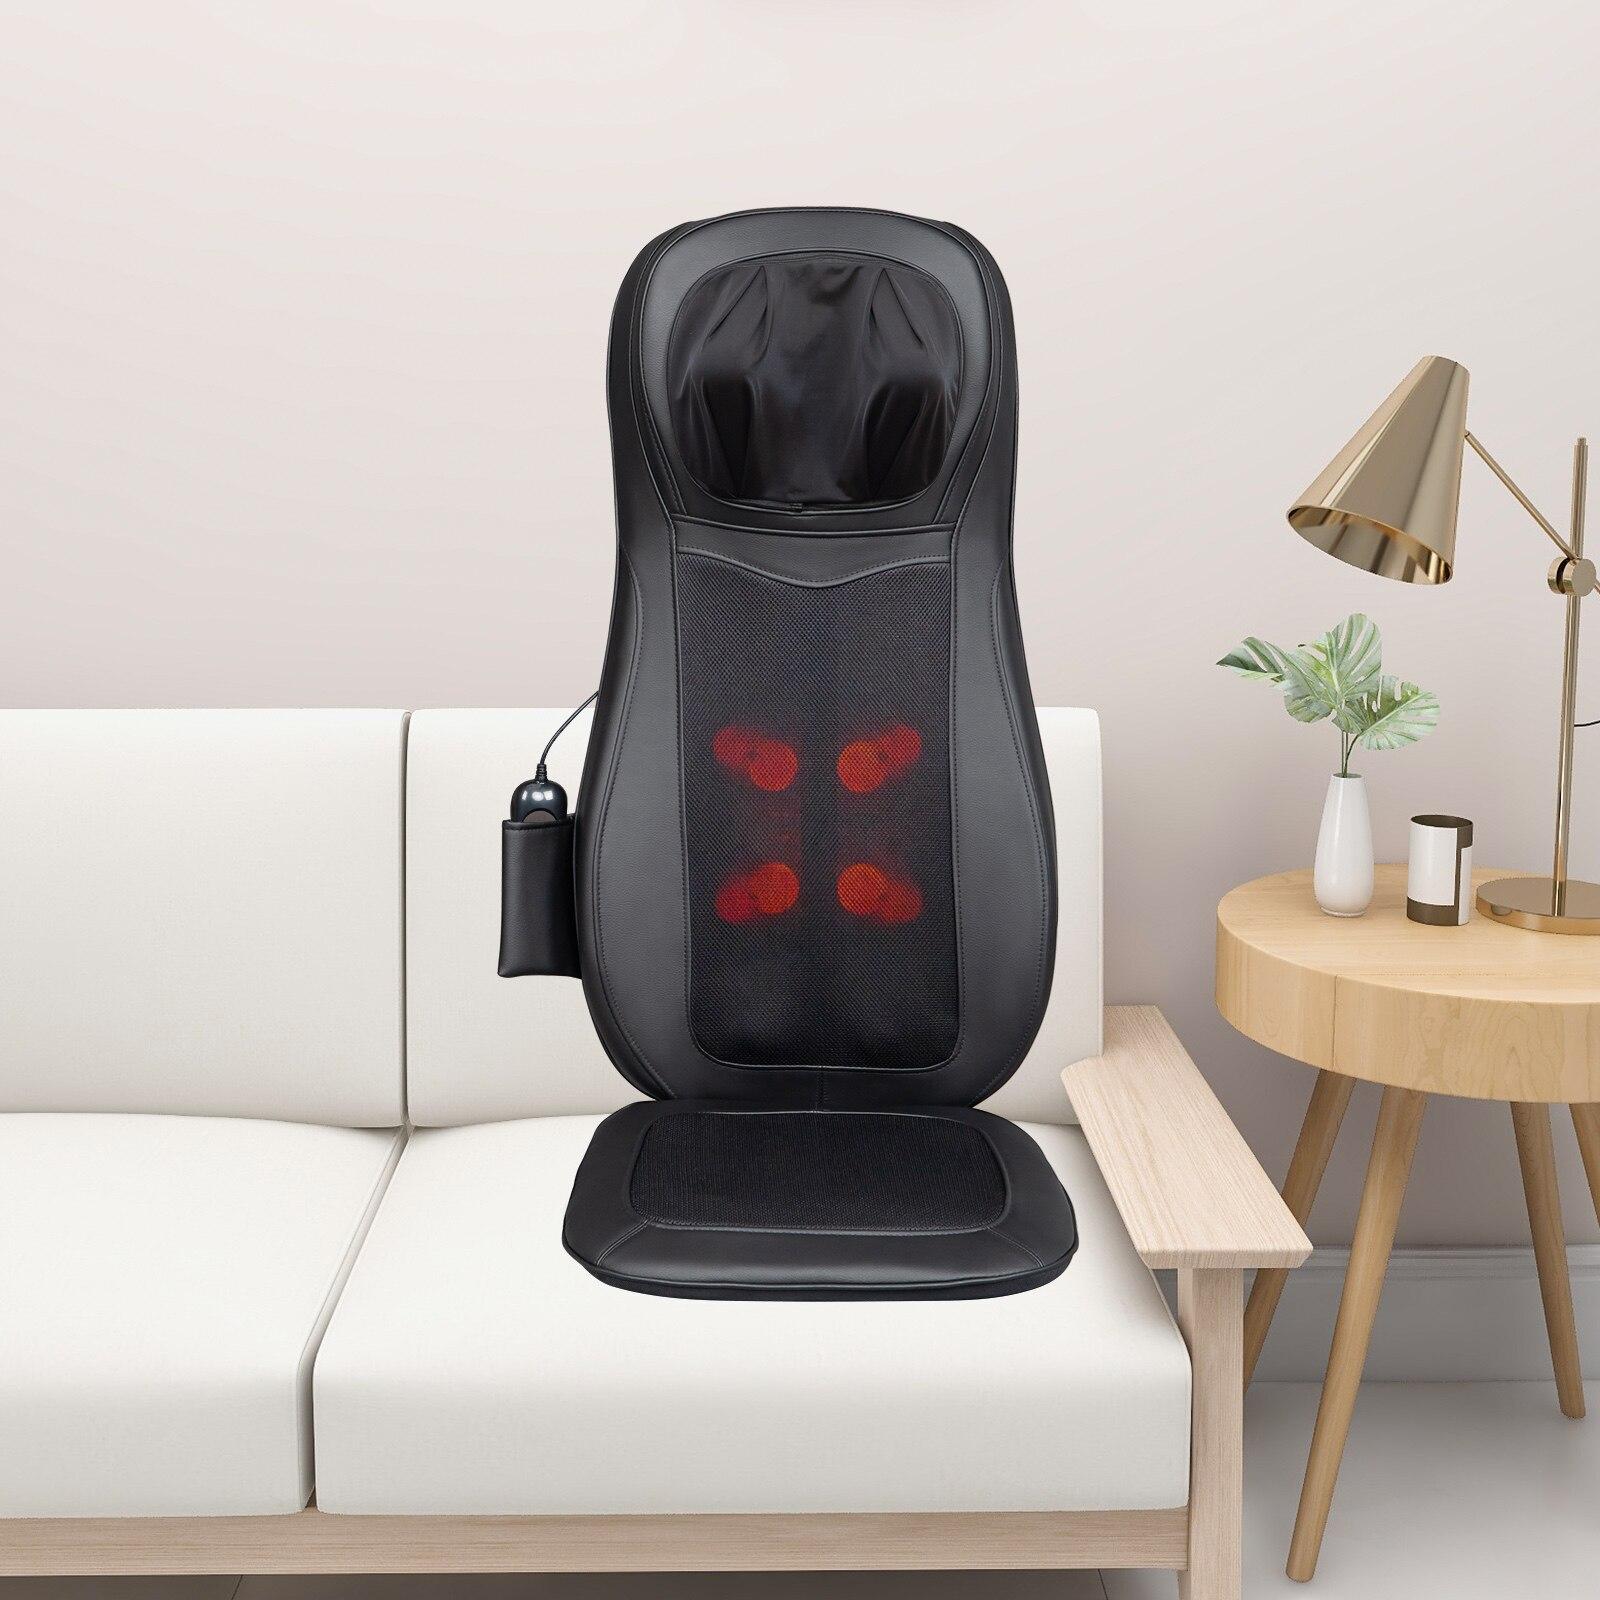 Electric vibrate back massager Pad body shoulder Heating massage chair machine Neck masage Back Kneading Shiatsu